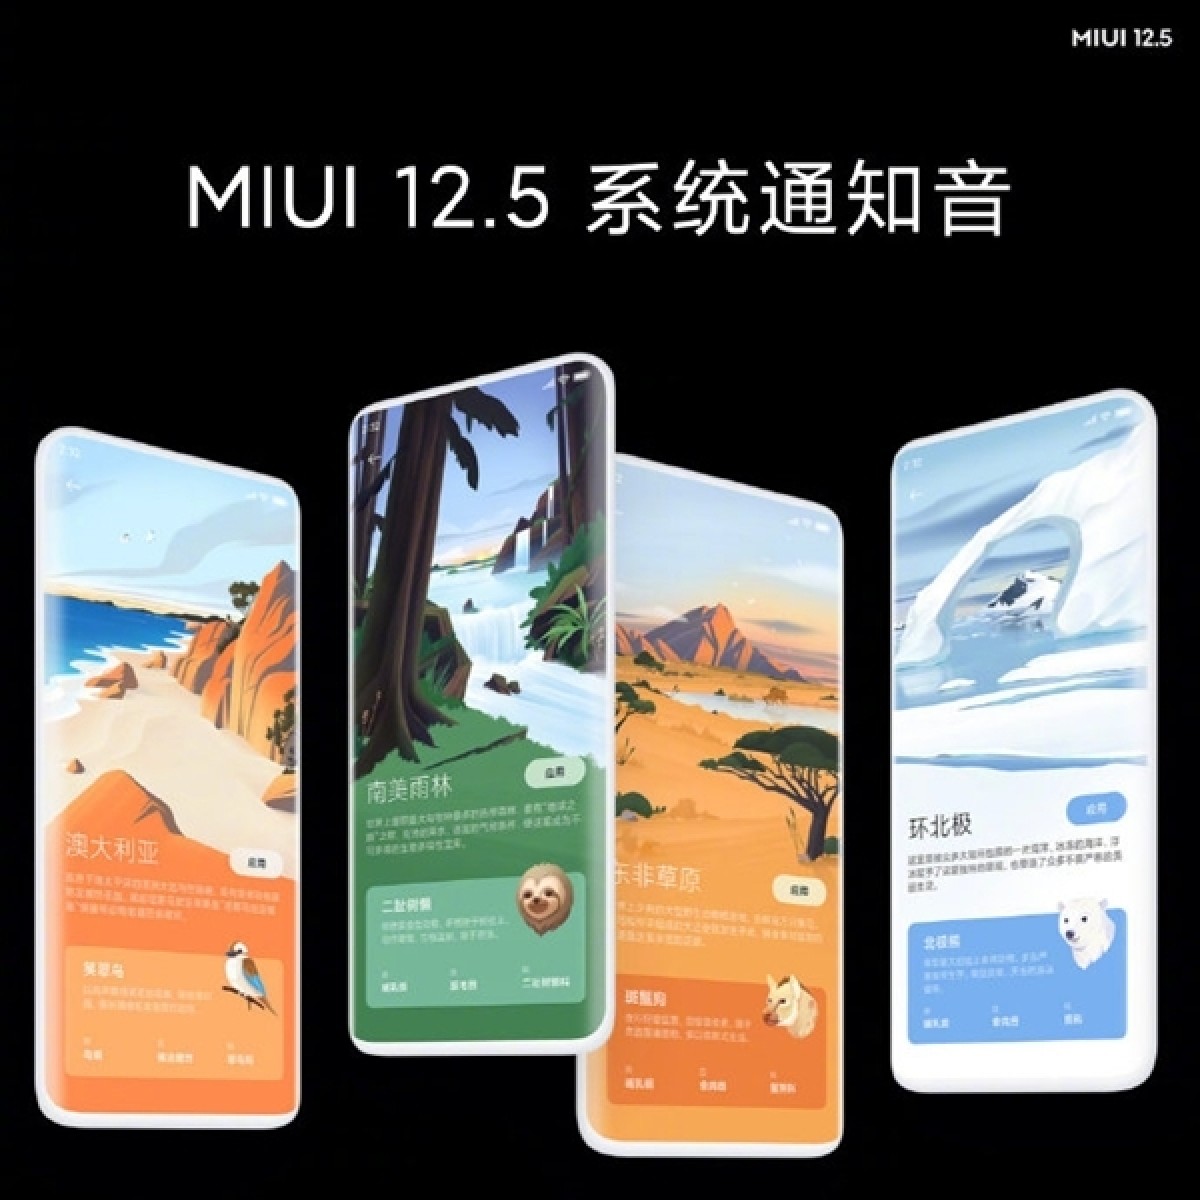 MIUI 12.5 User Interface